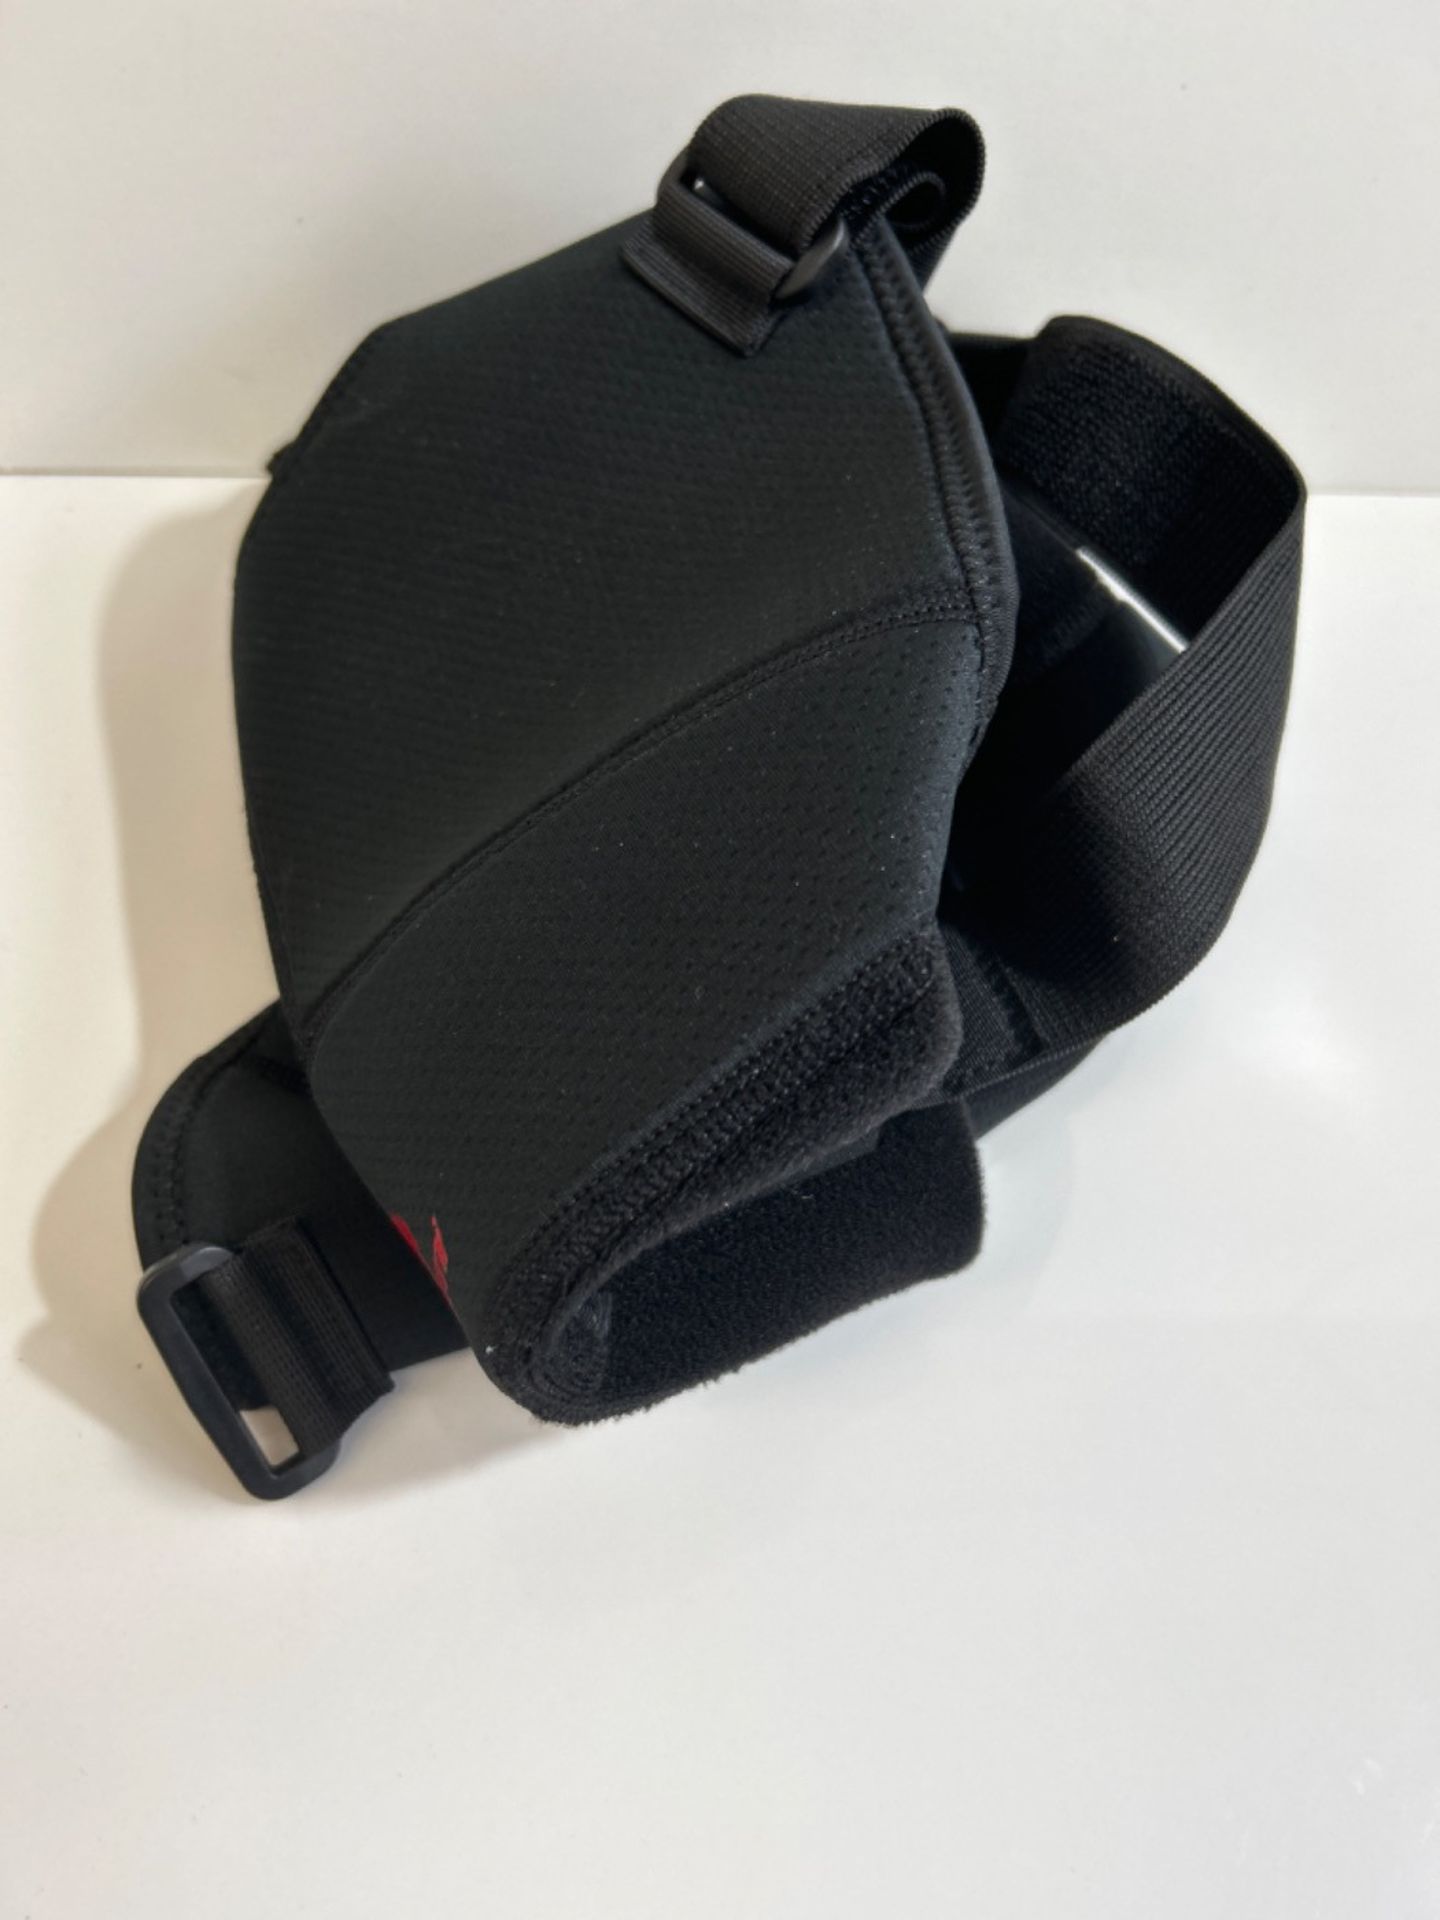 Kuangmi Sport Double Shoulder Support Adjustable Black 1 Piece (XX-Large) - Image 3 of 3